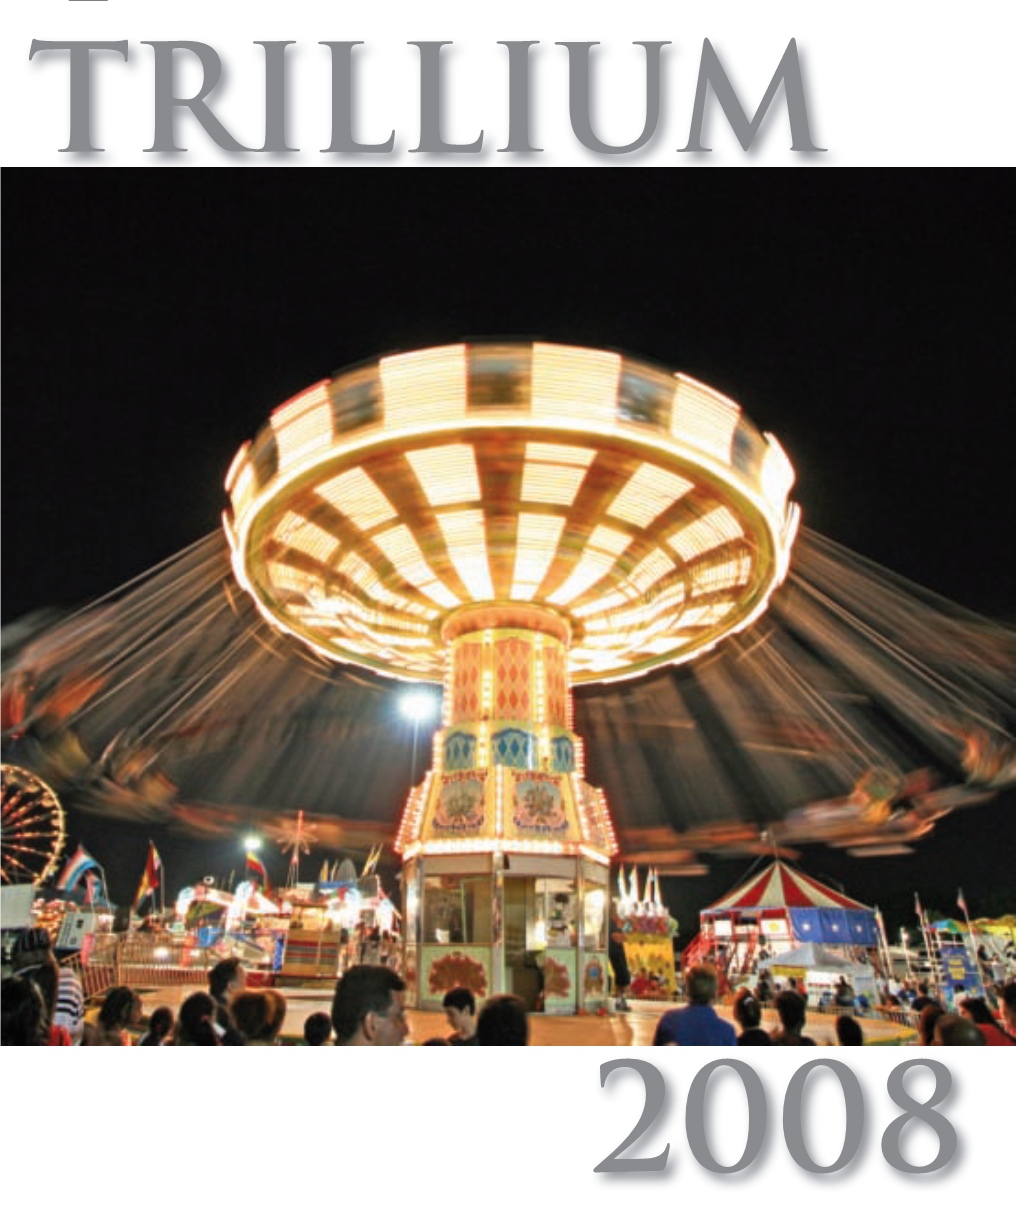 Trillium 2008 FINAL.Qxp:Layout 1 4/15/08 12:28 PM Page 1